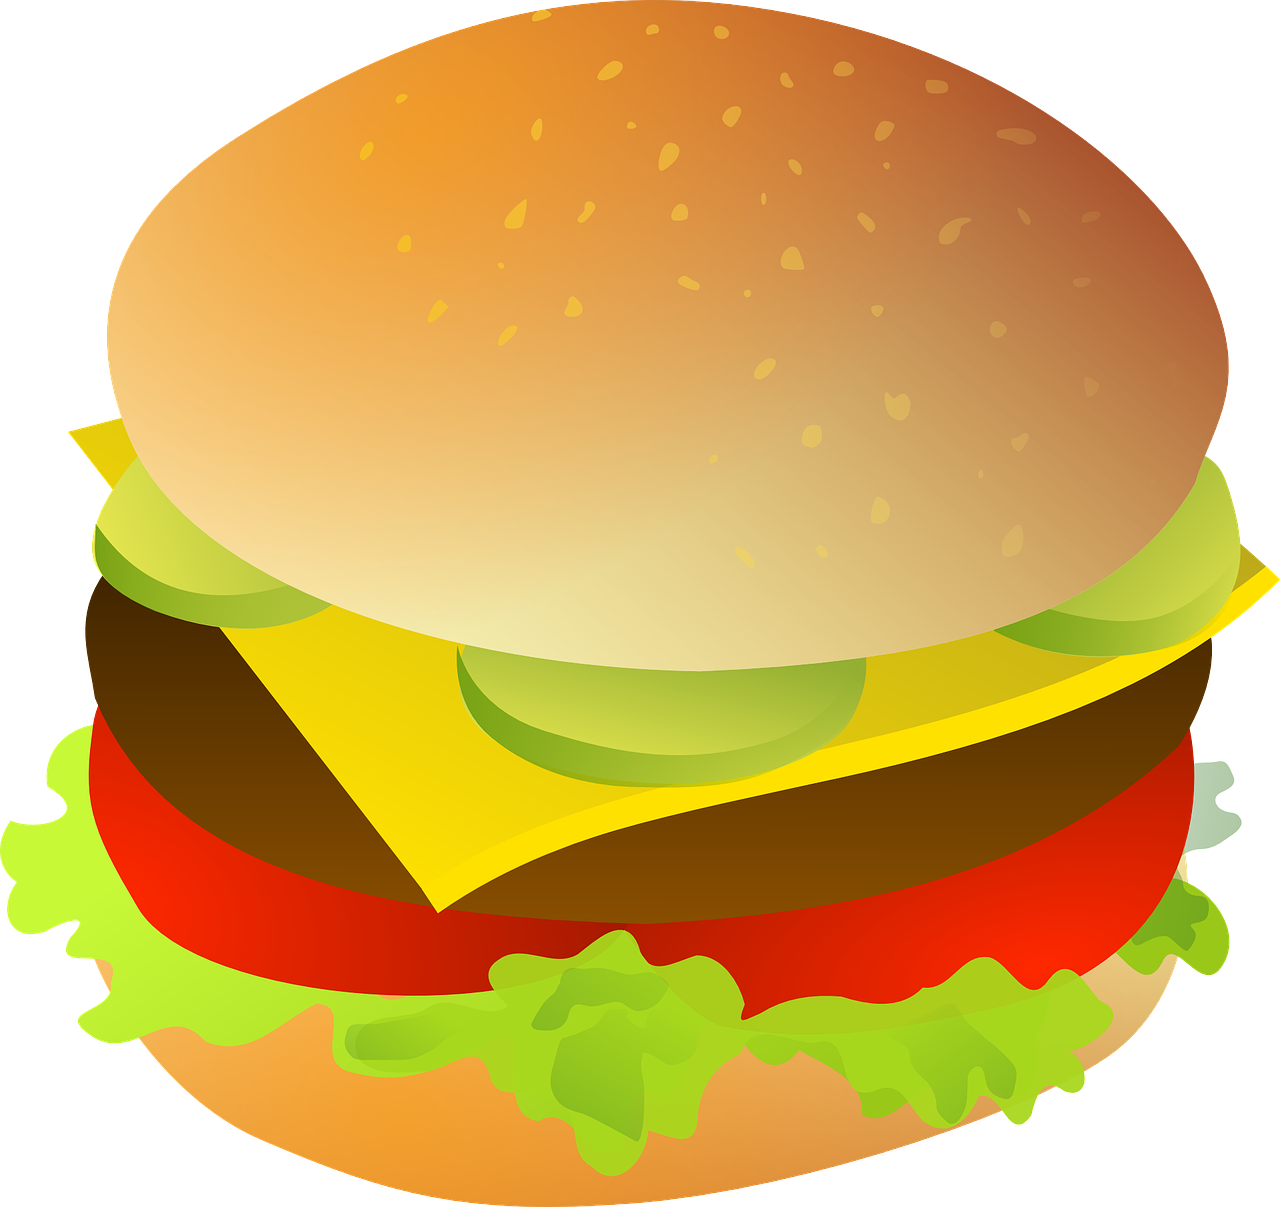 McDonald's burger graphic